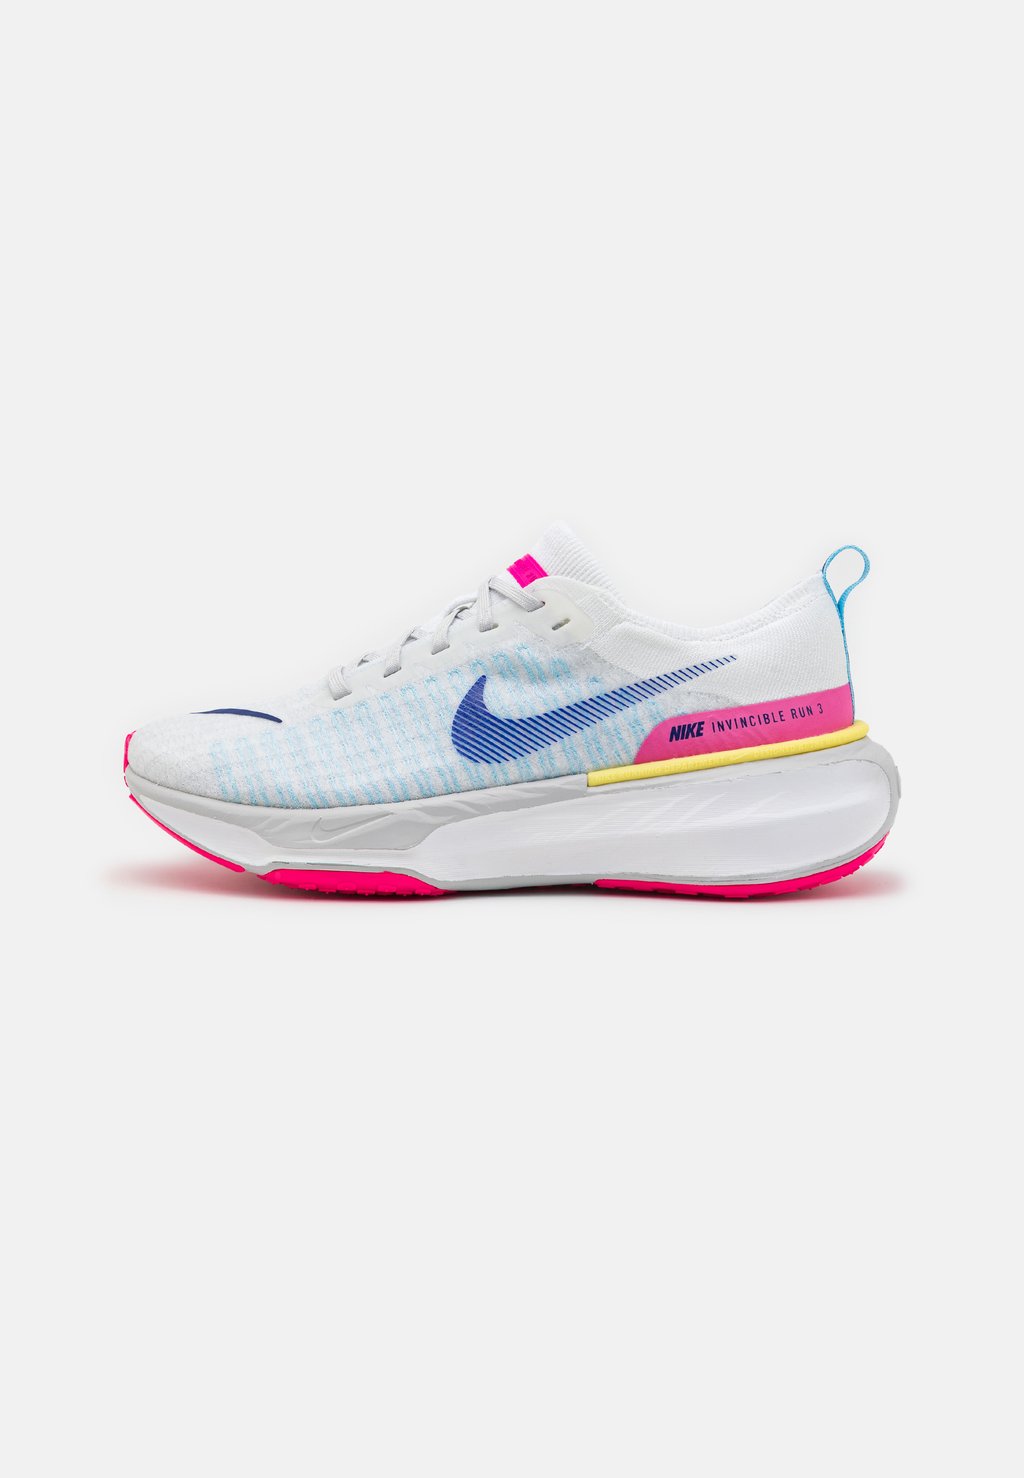 нейтральные кроссовки Zoomx Invincible Run Fk 3 Nike, цвет white/deep royal blue/photon dust/fierce pink/aquarius blue/light laser orange